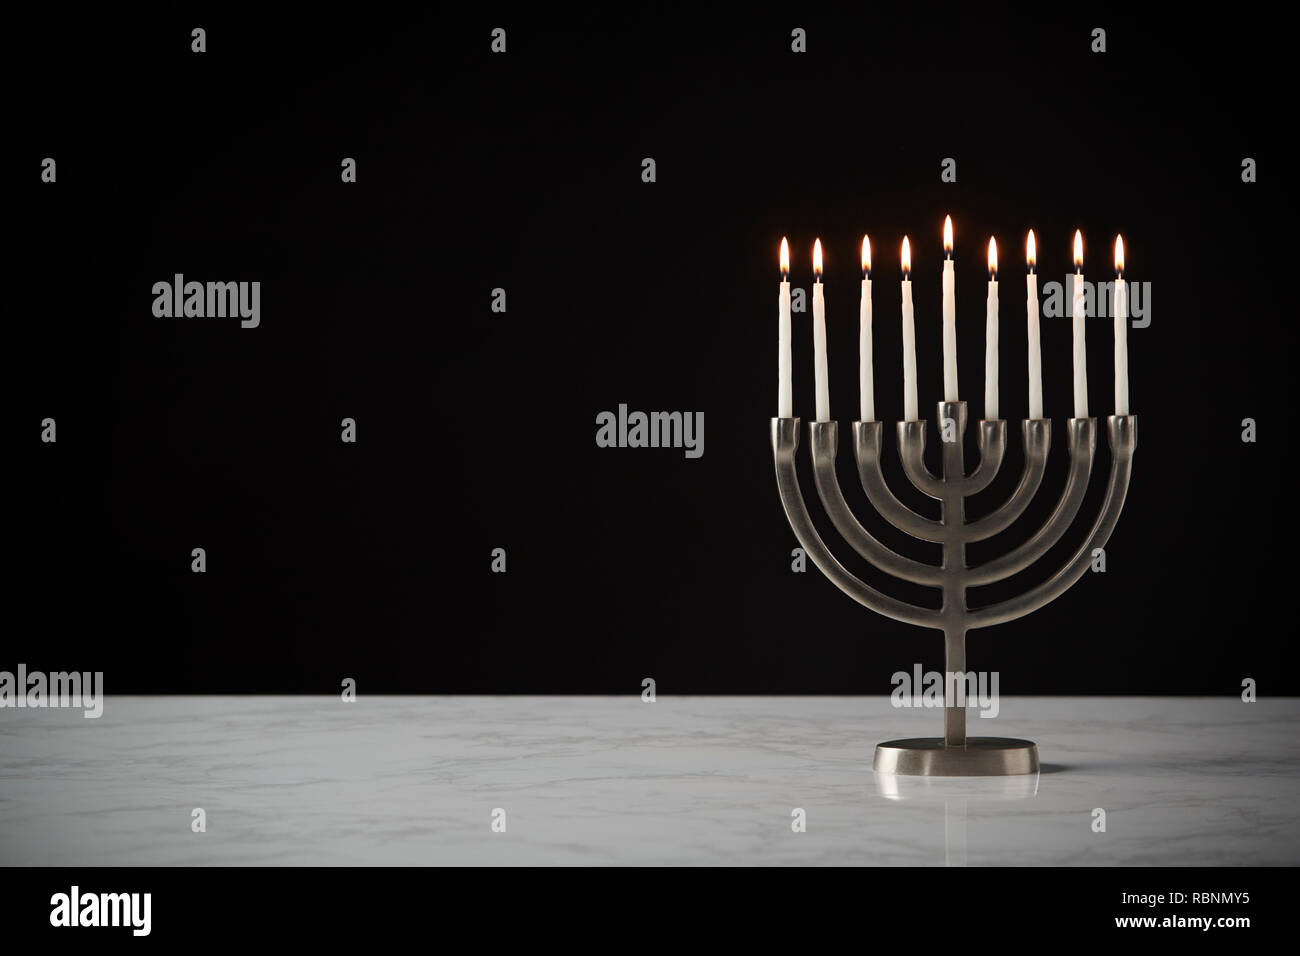 Lit Candles On Metal Hanukkah Menorah On Marble Surface Against Black Studio Background Stock Photo